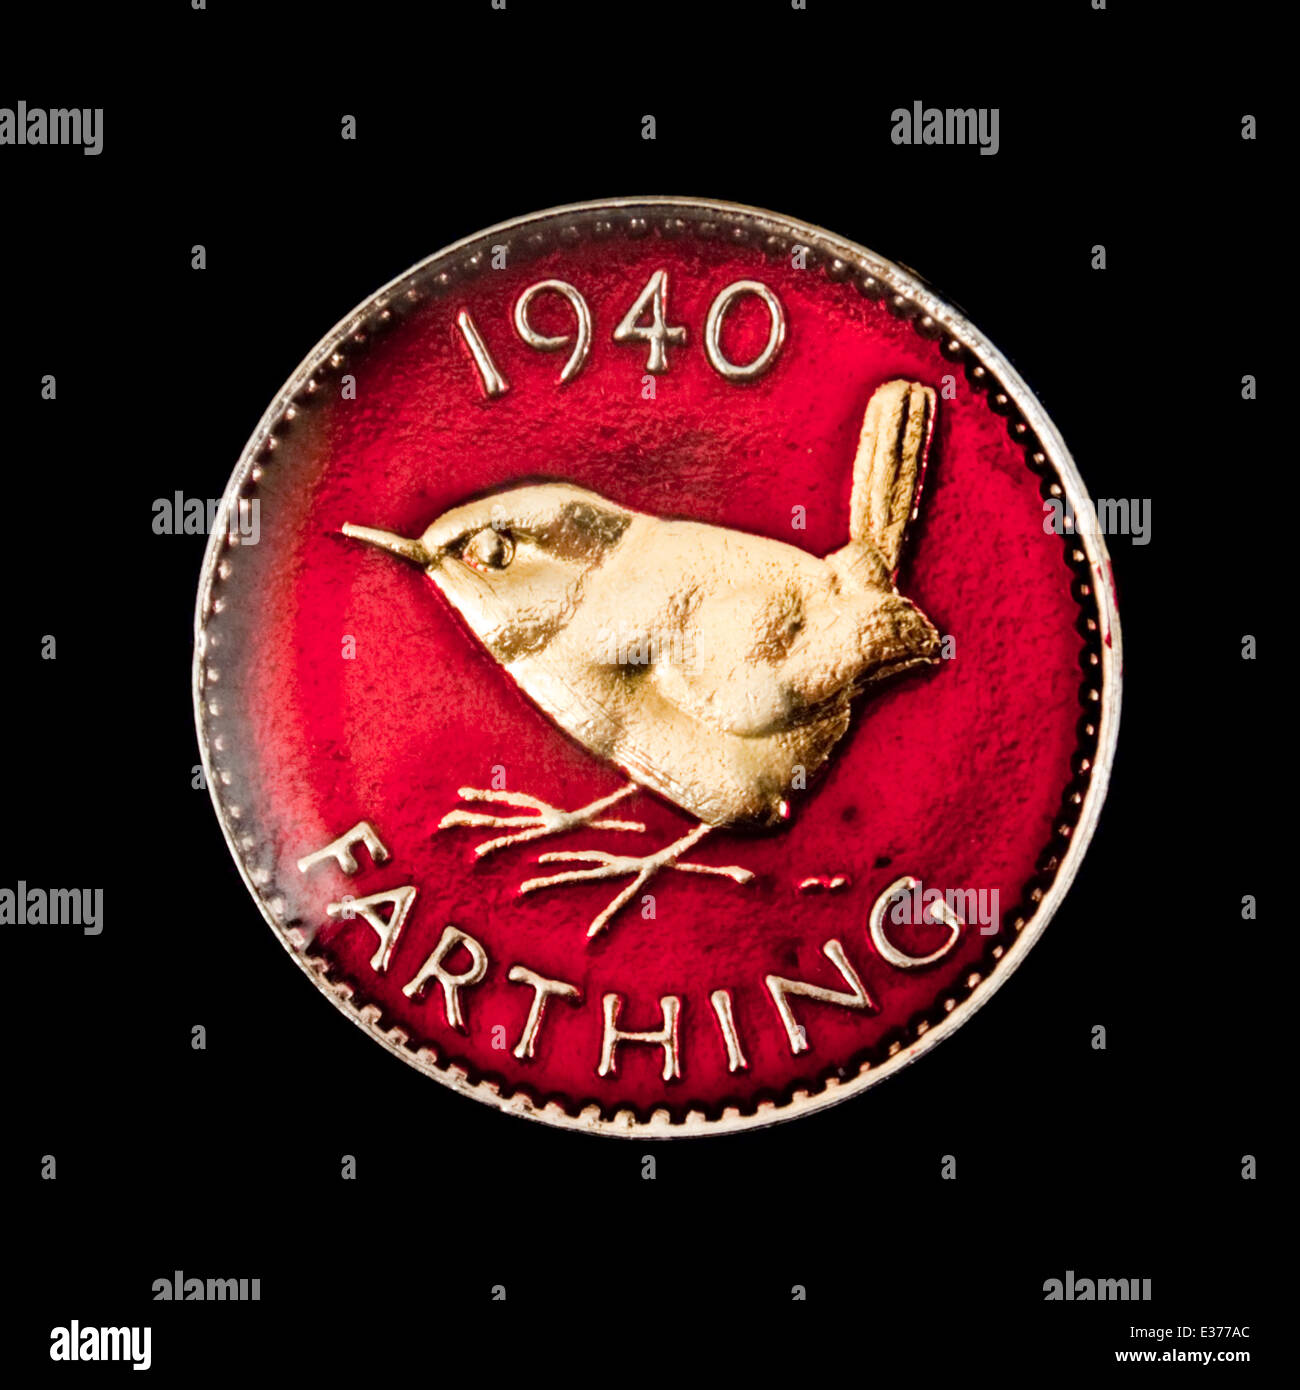 Vintage enameled British 1940 Farthing coin Stock Photo